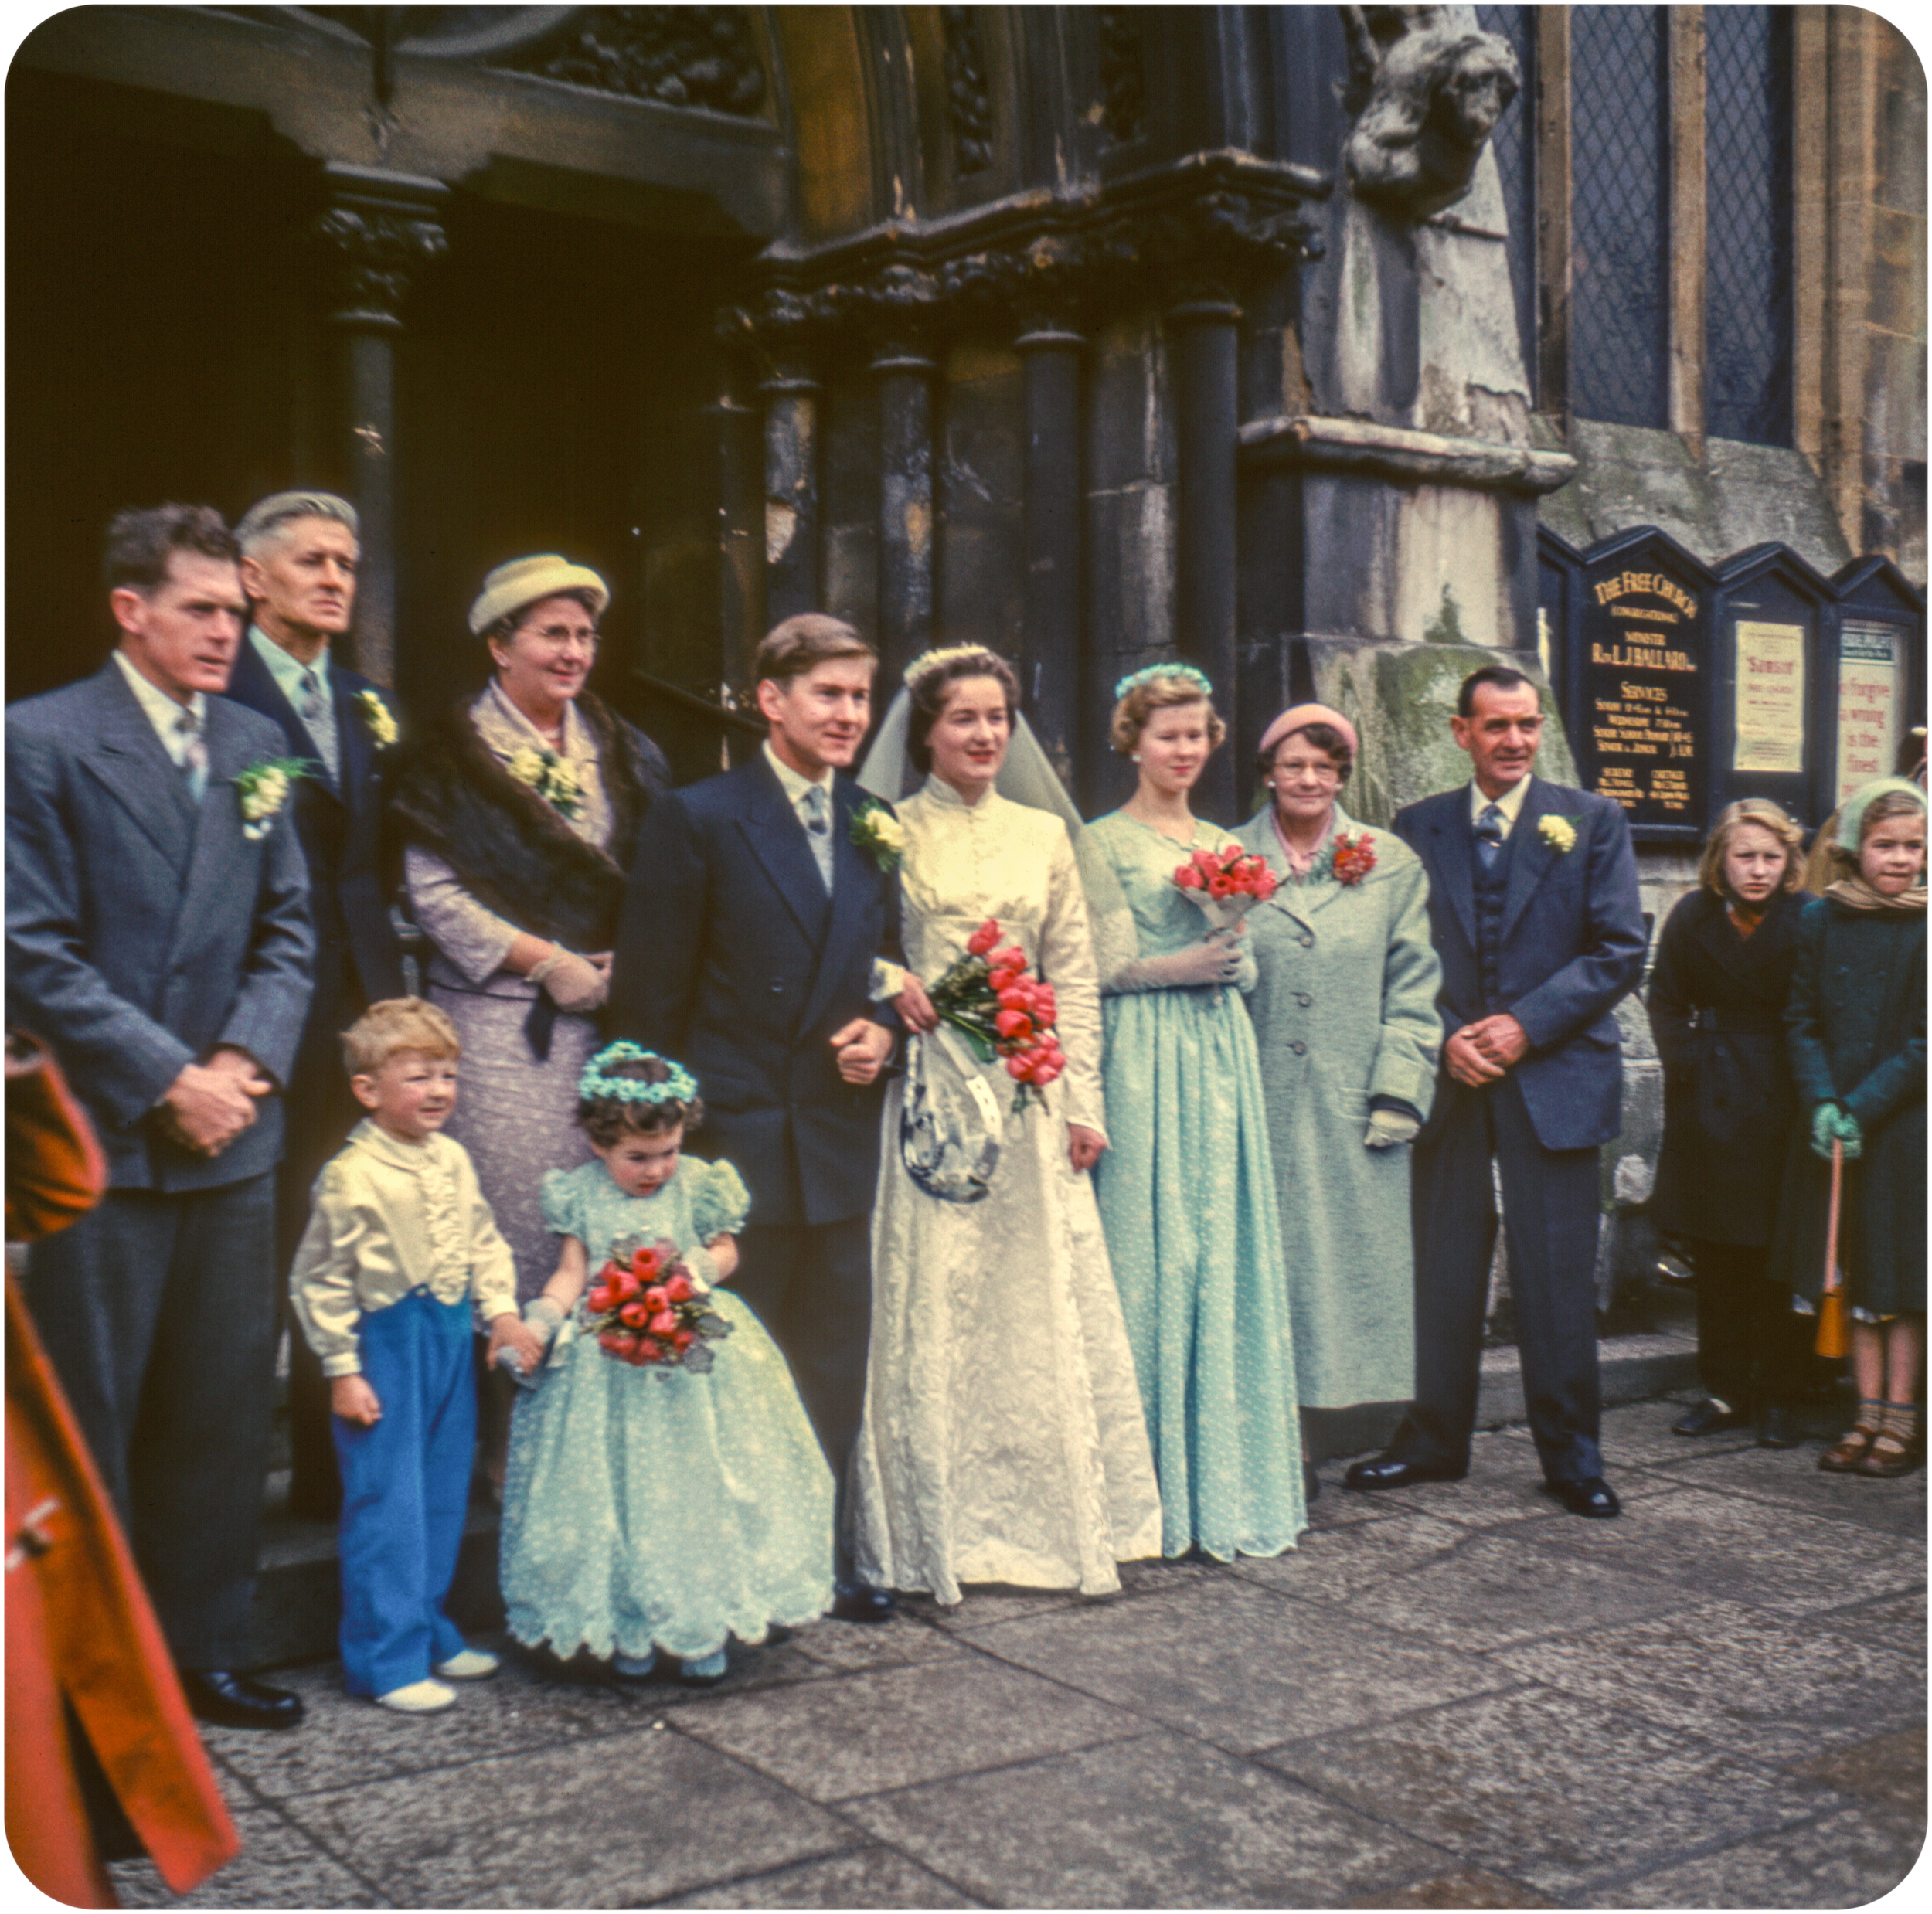 Brian & Daphne's Wedding - St. Ives - April 4th 1958